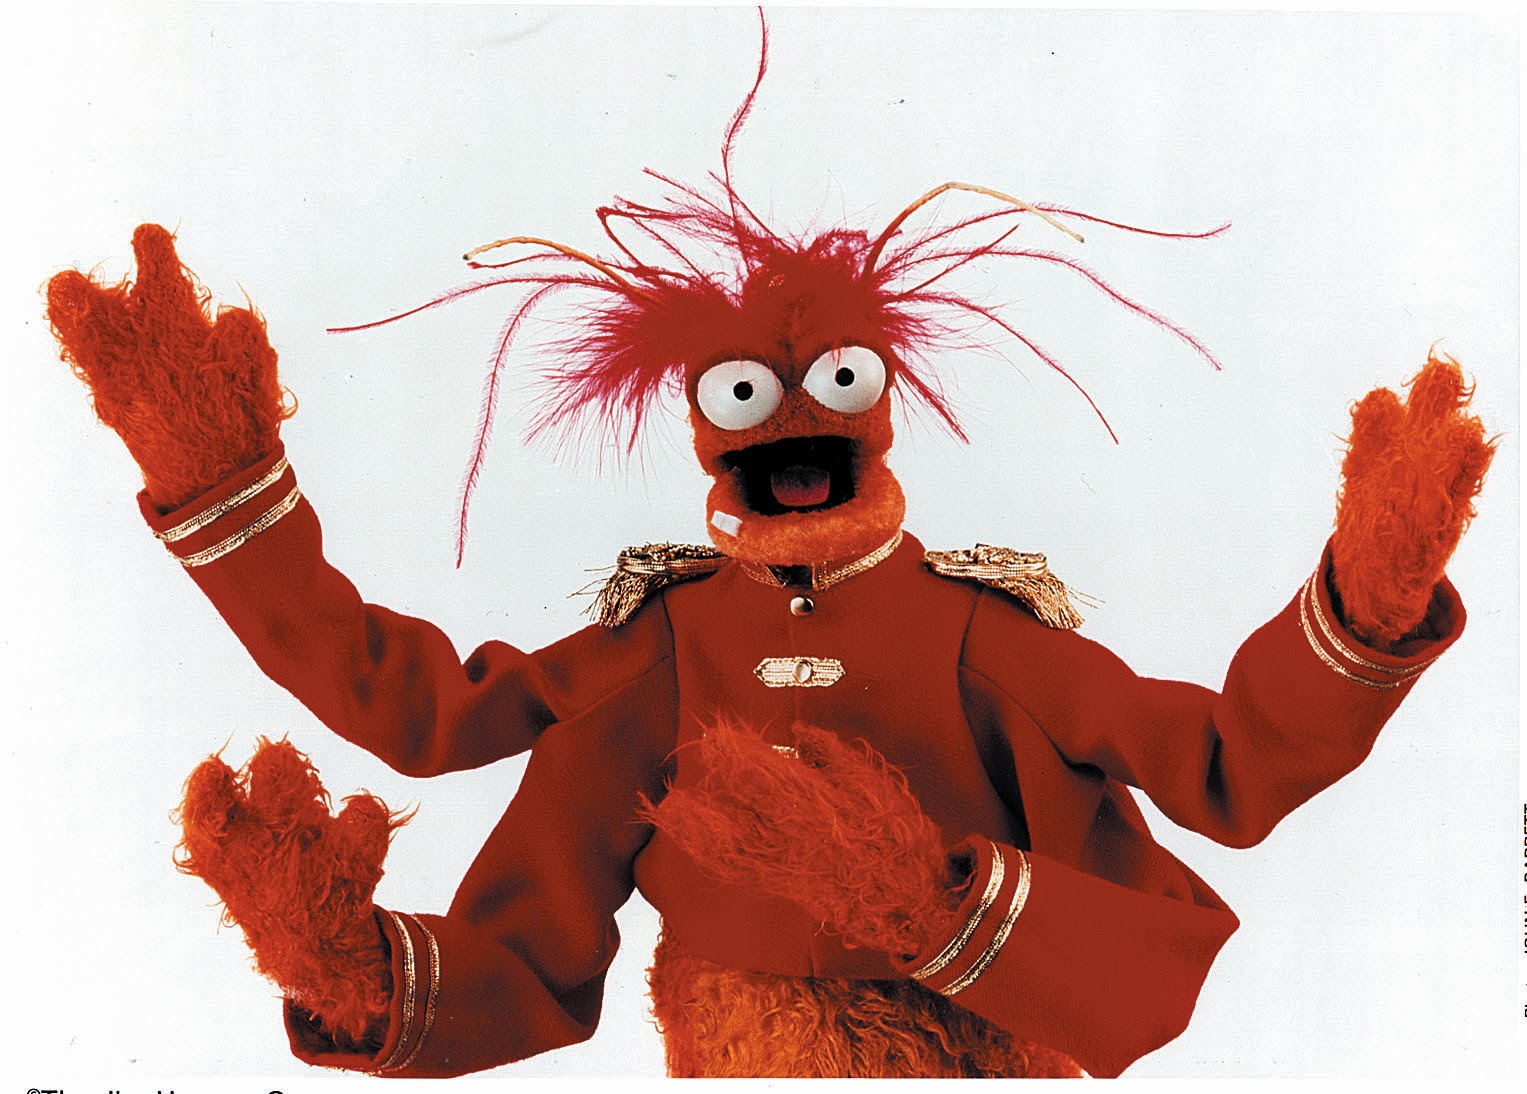 Weekly Muppet Wednesdays: Pepe the King Prawn. The Muppet Mindset